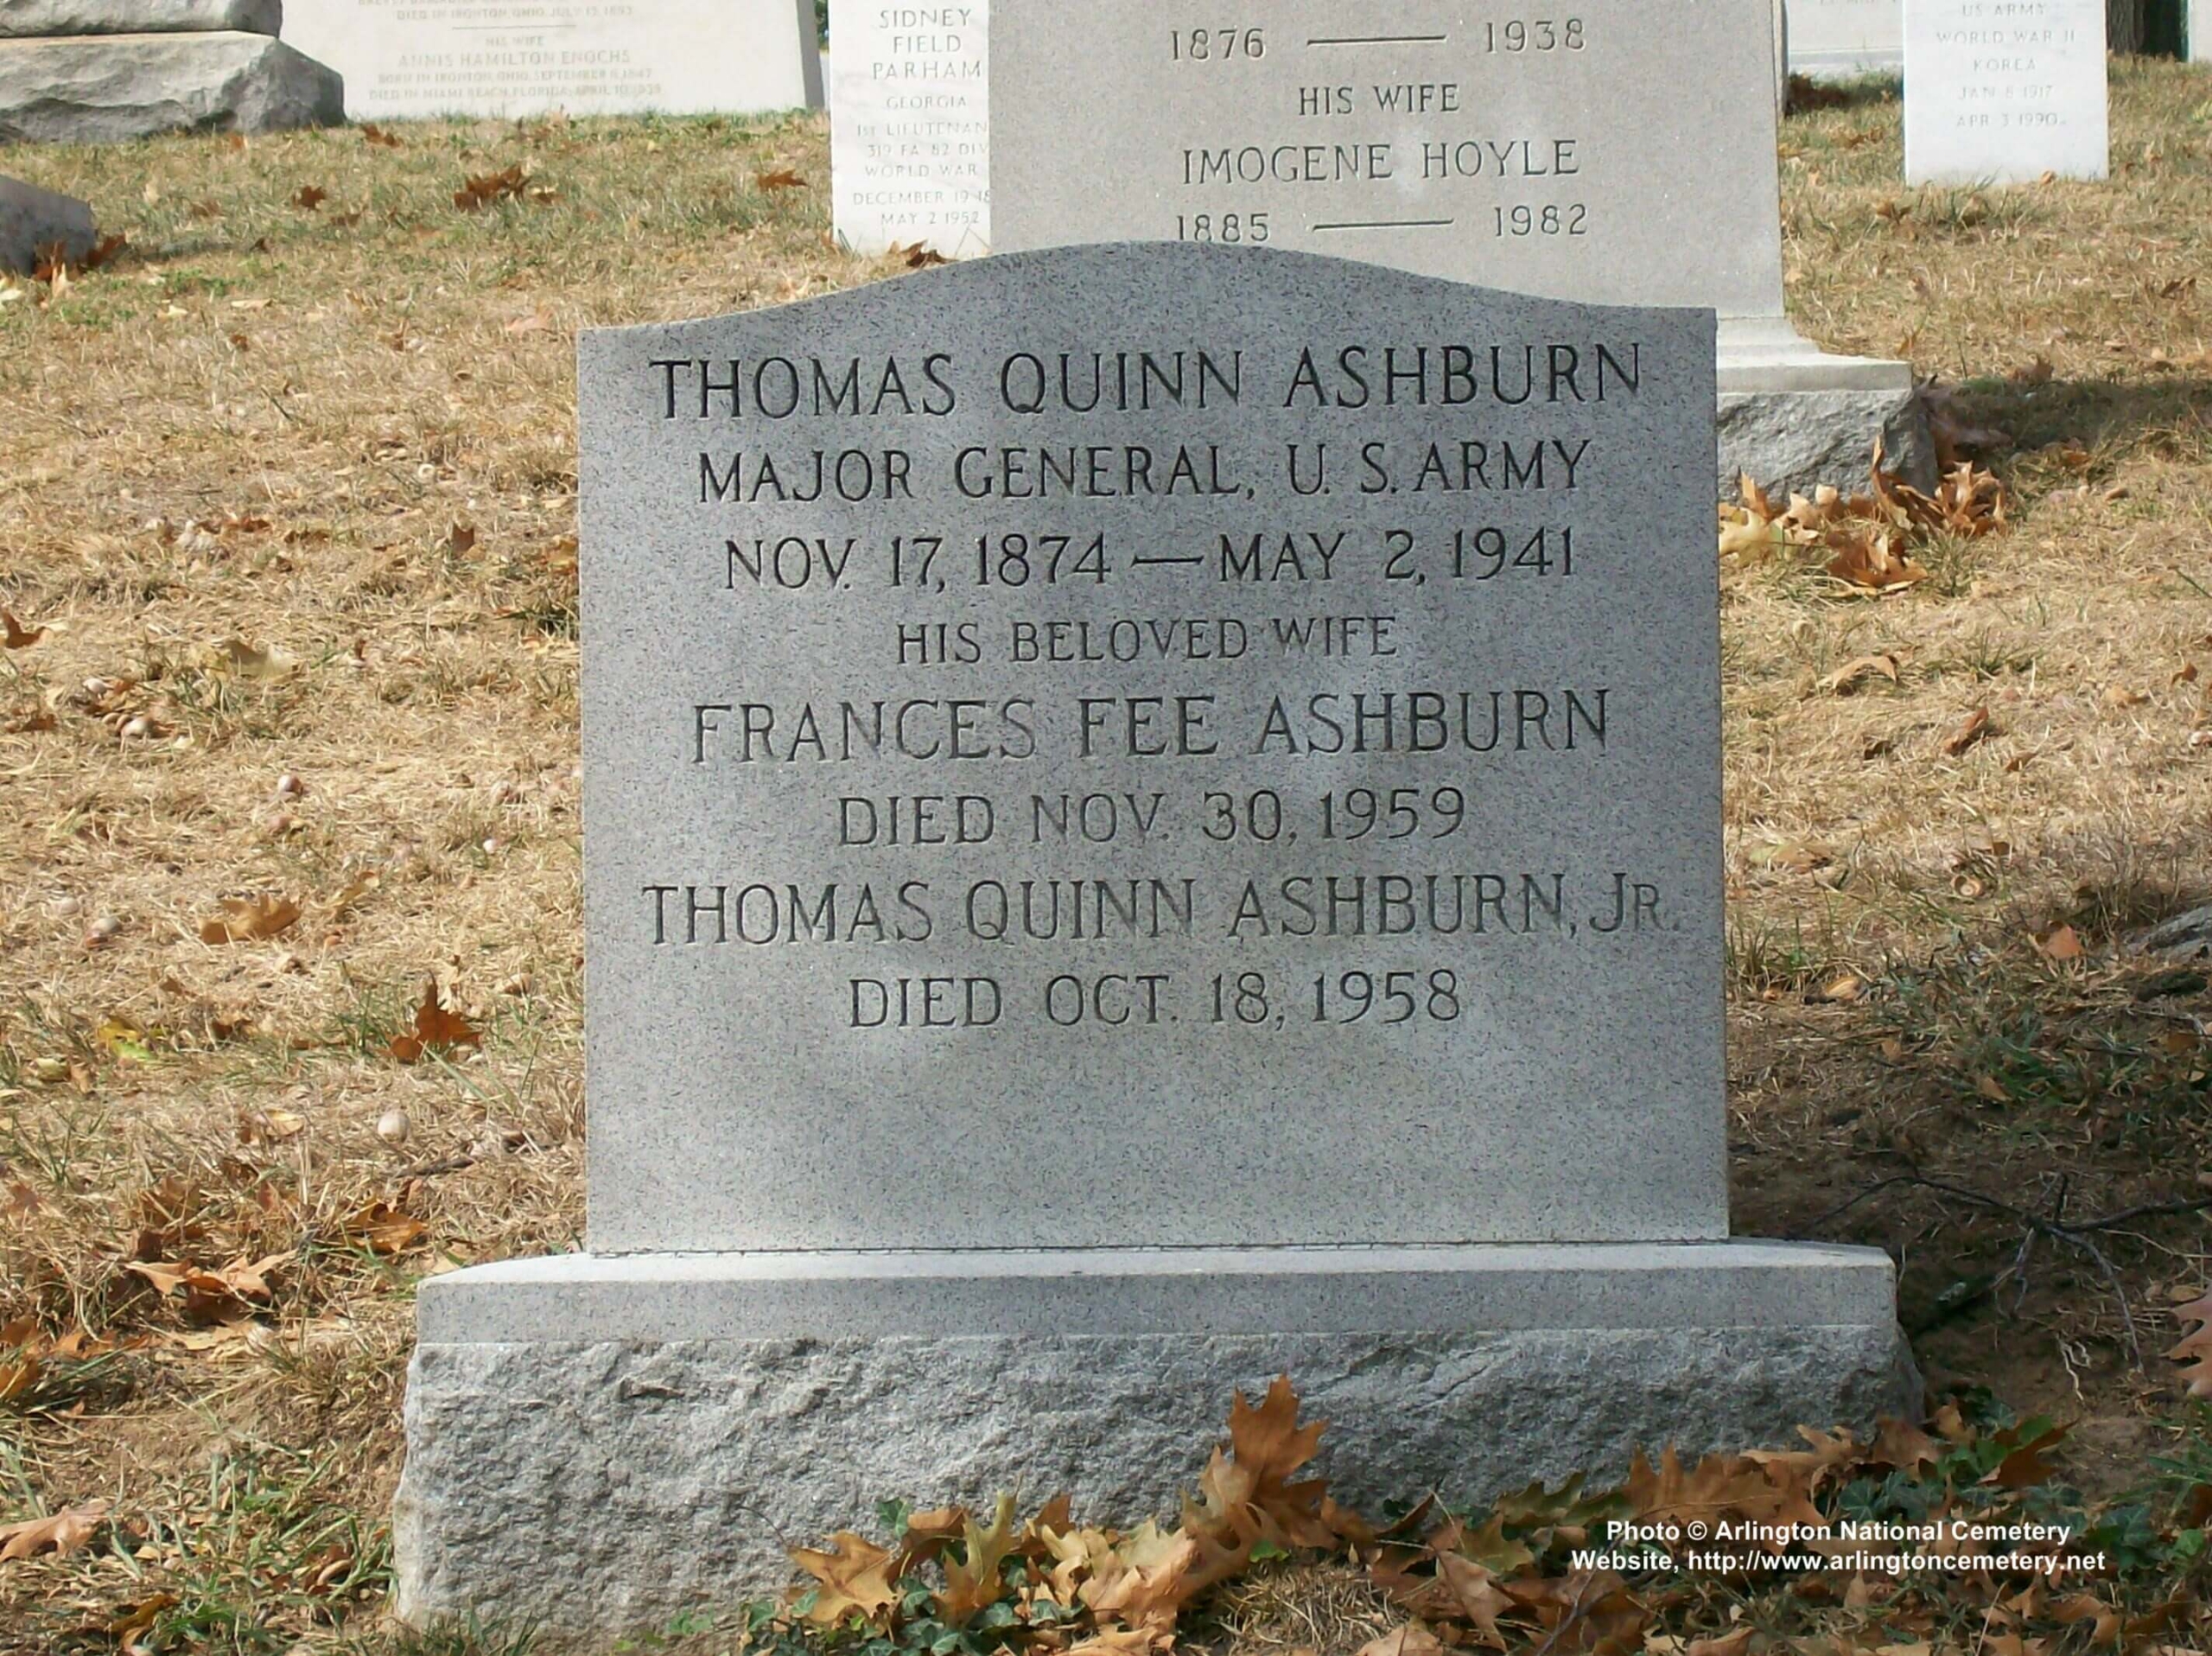 tqashburn-gravesite-photo-october-2007-001